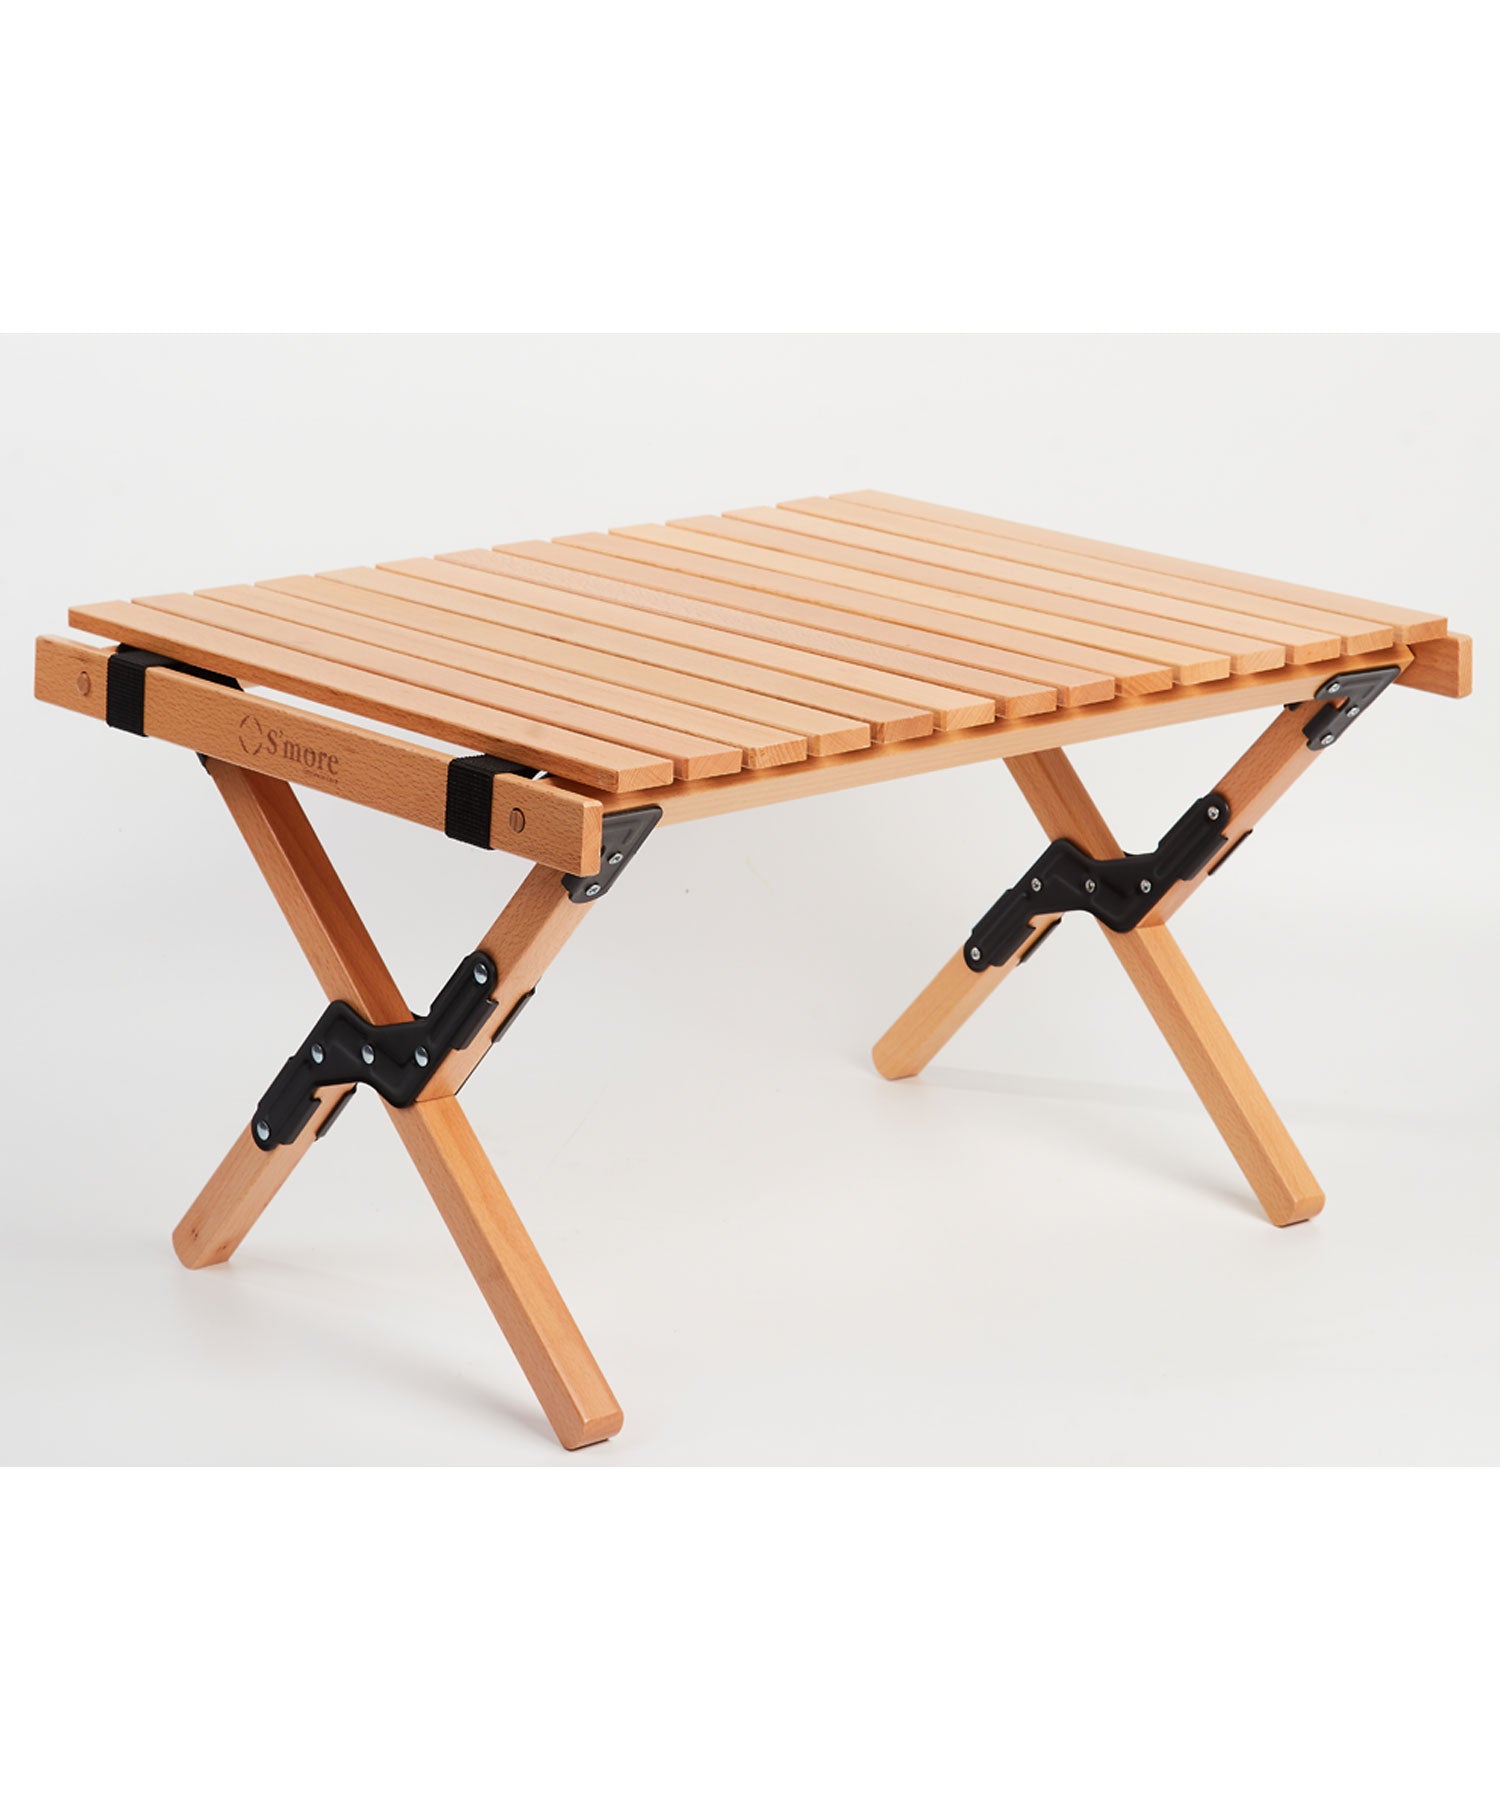 S'more(スモア) Woodi Roll Table キャンプ テーブル ウ